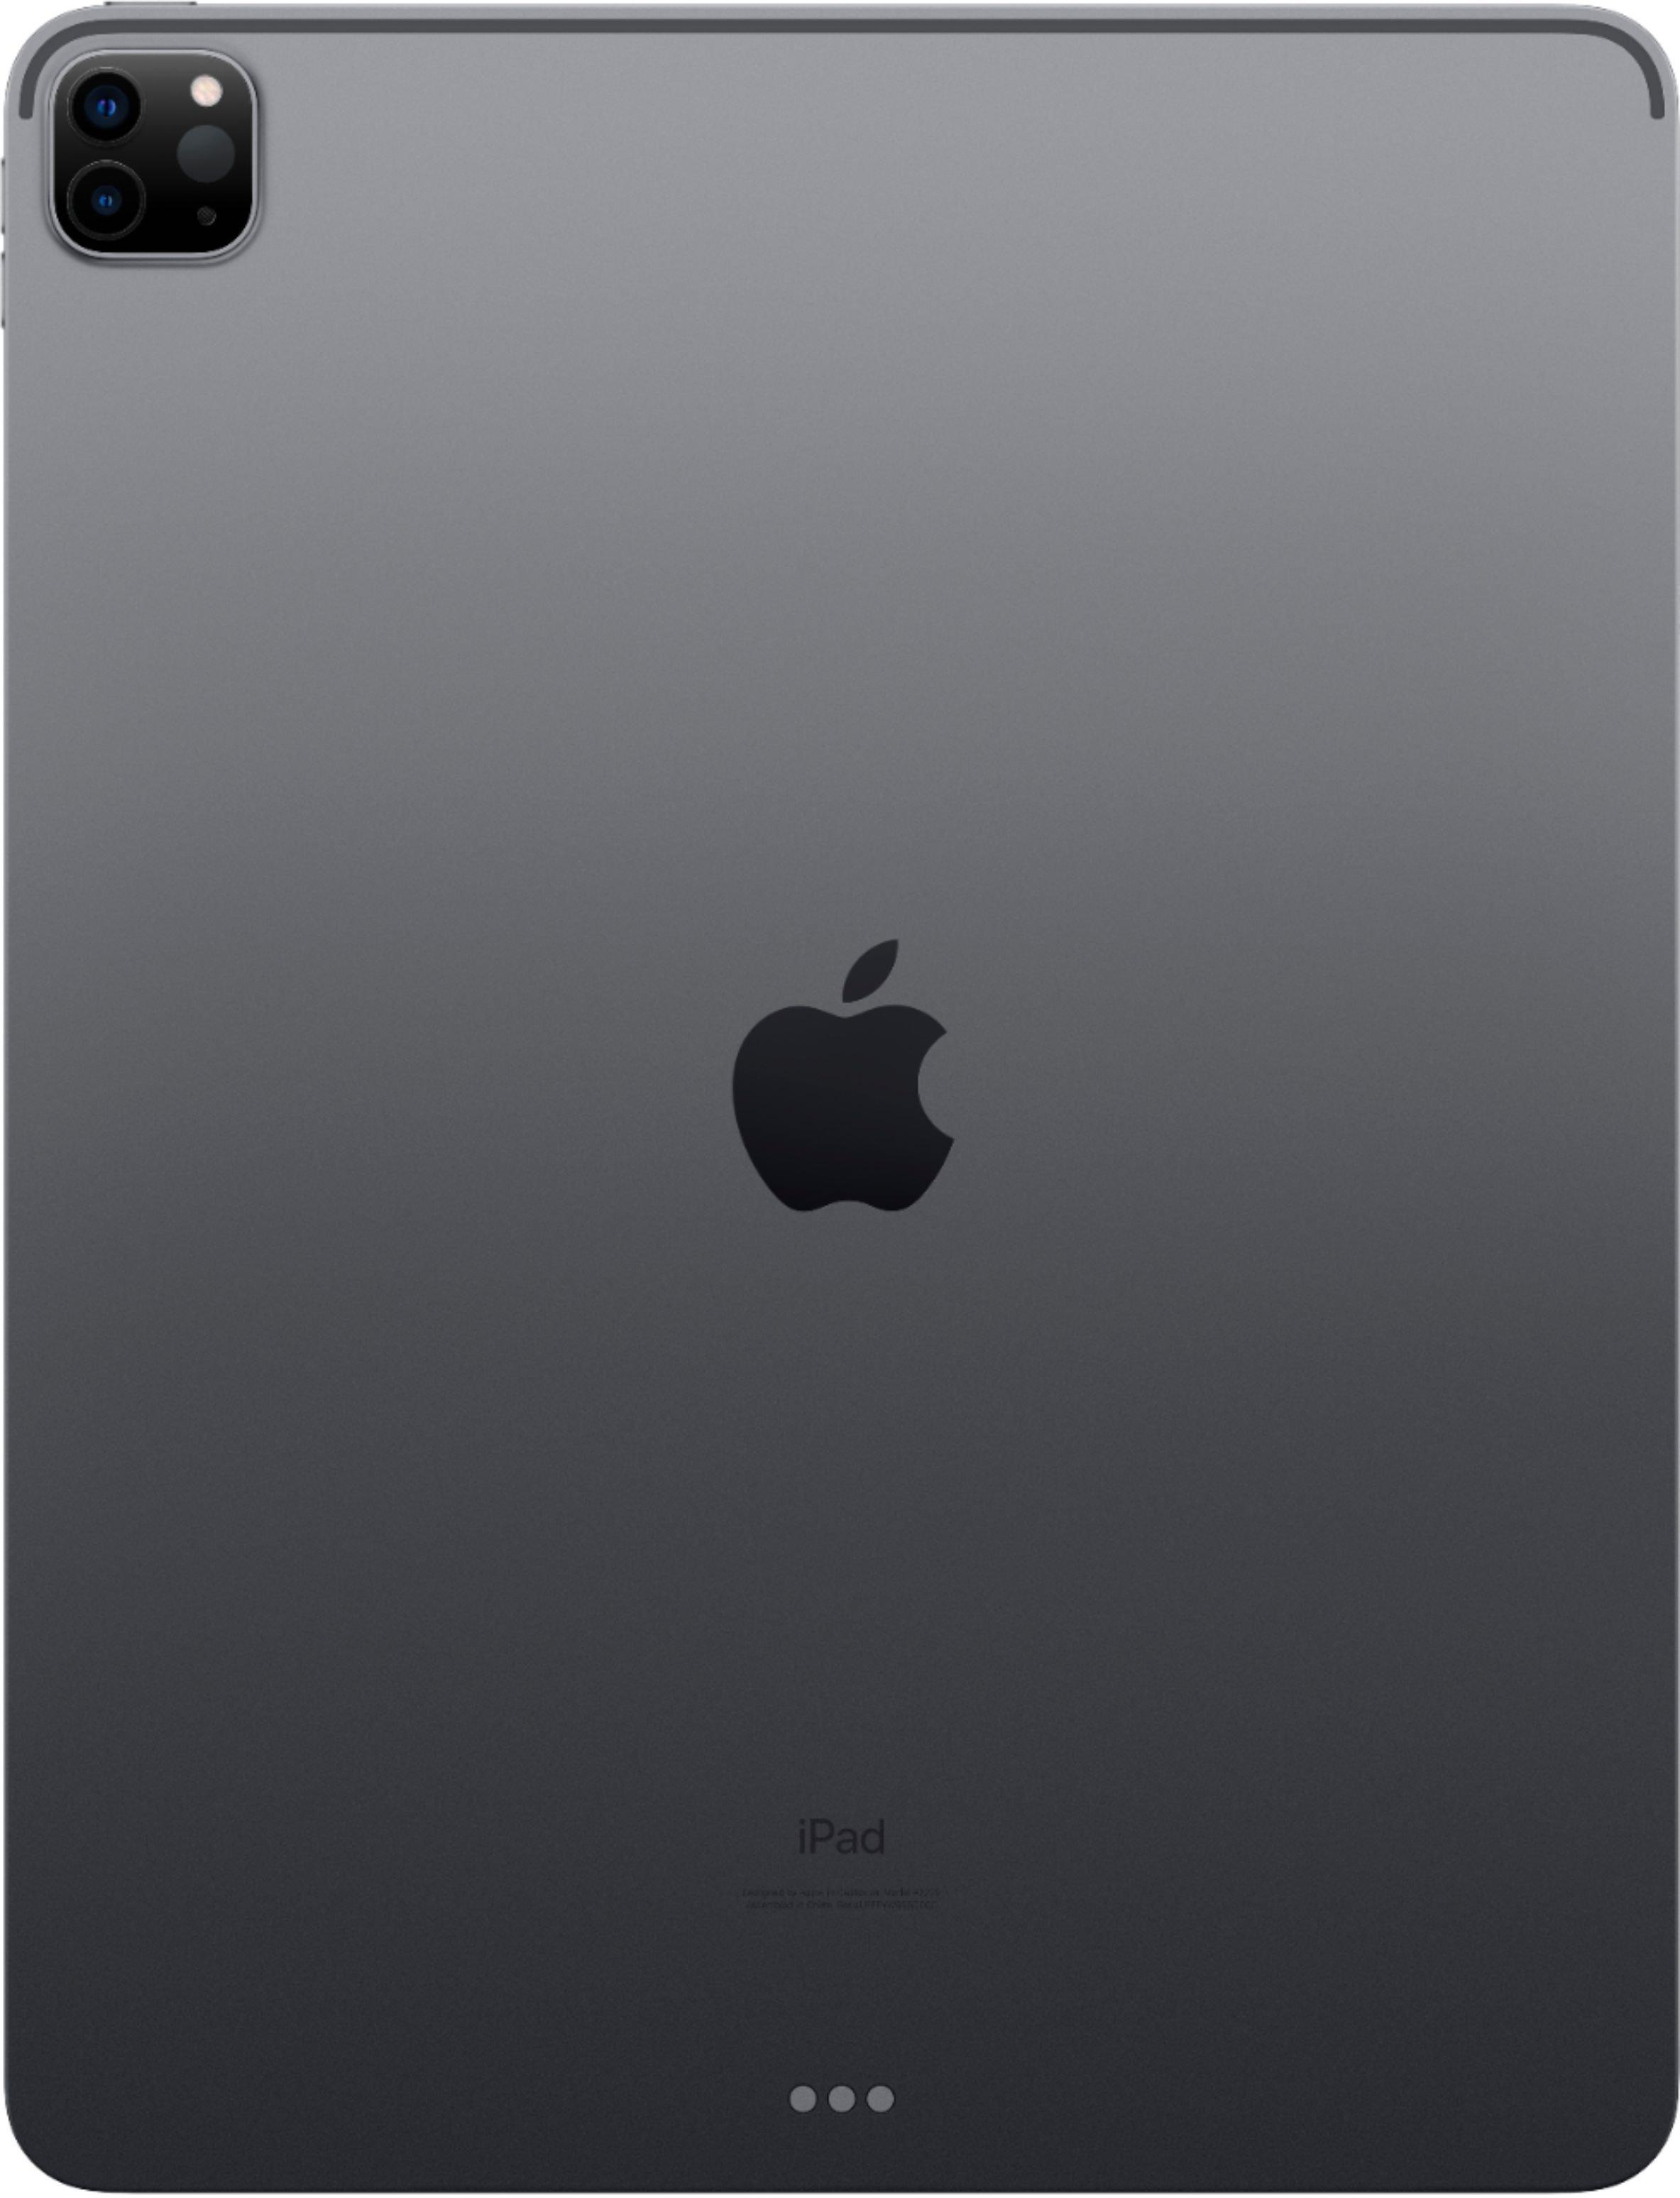 iPad Pro 12.9-Inch (4th Gen) New 512GB - WiFi-Cellular - Released 2020